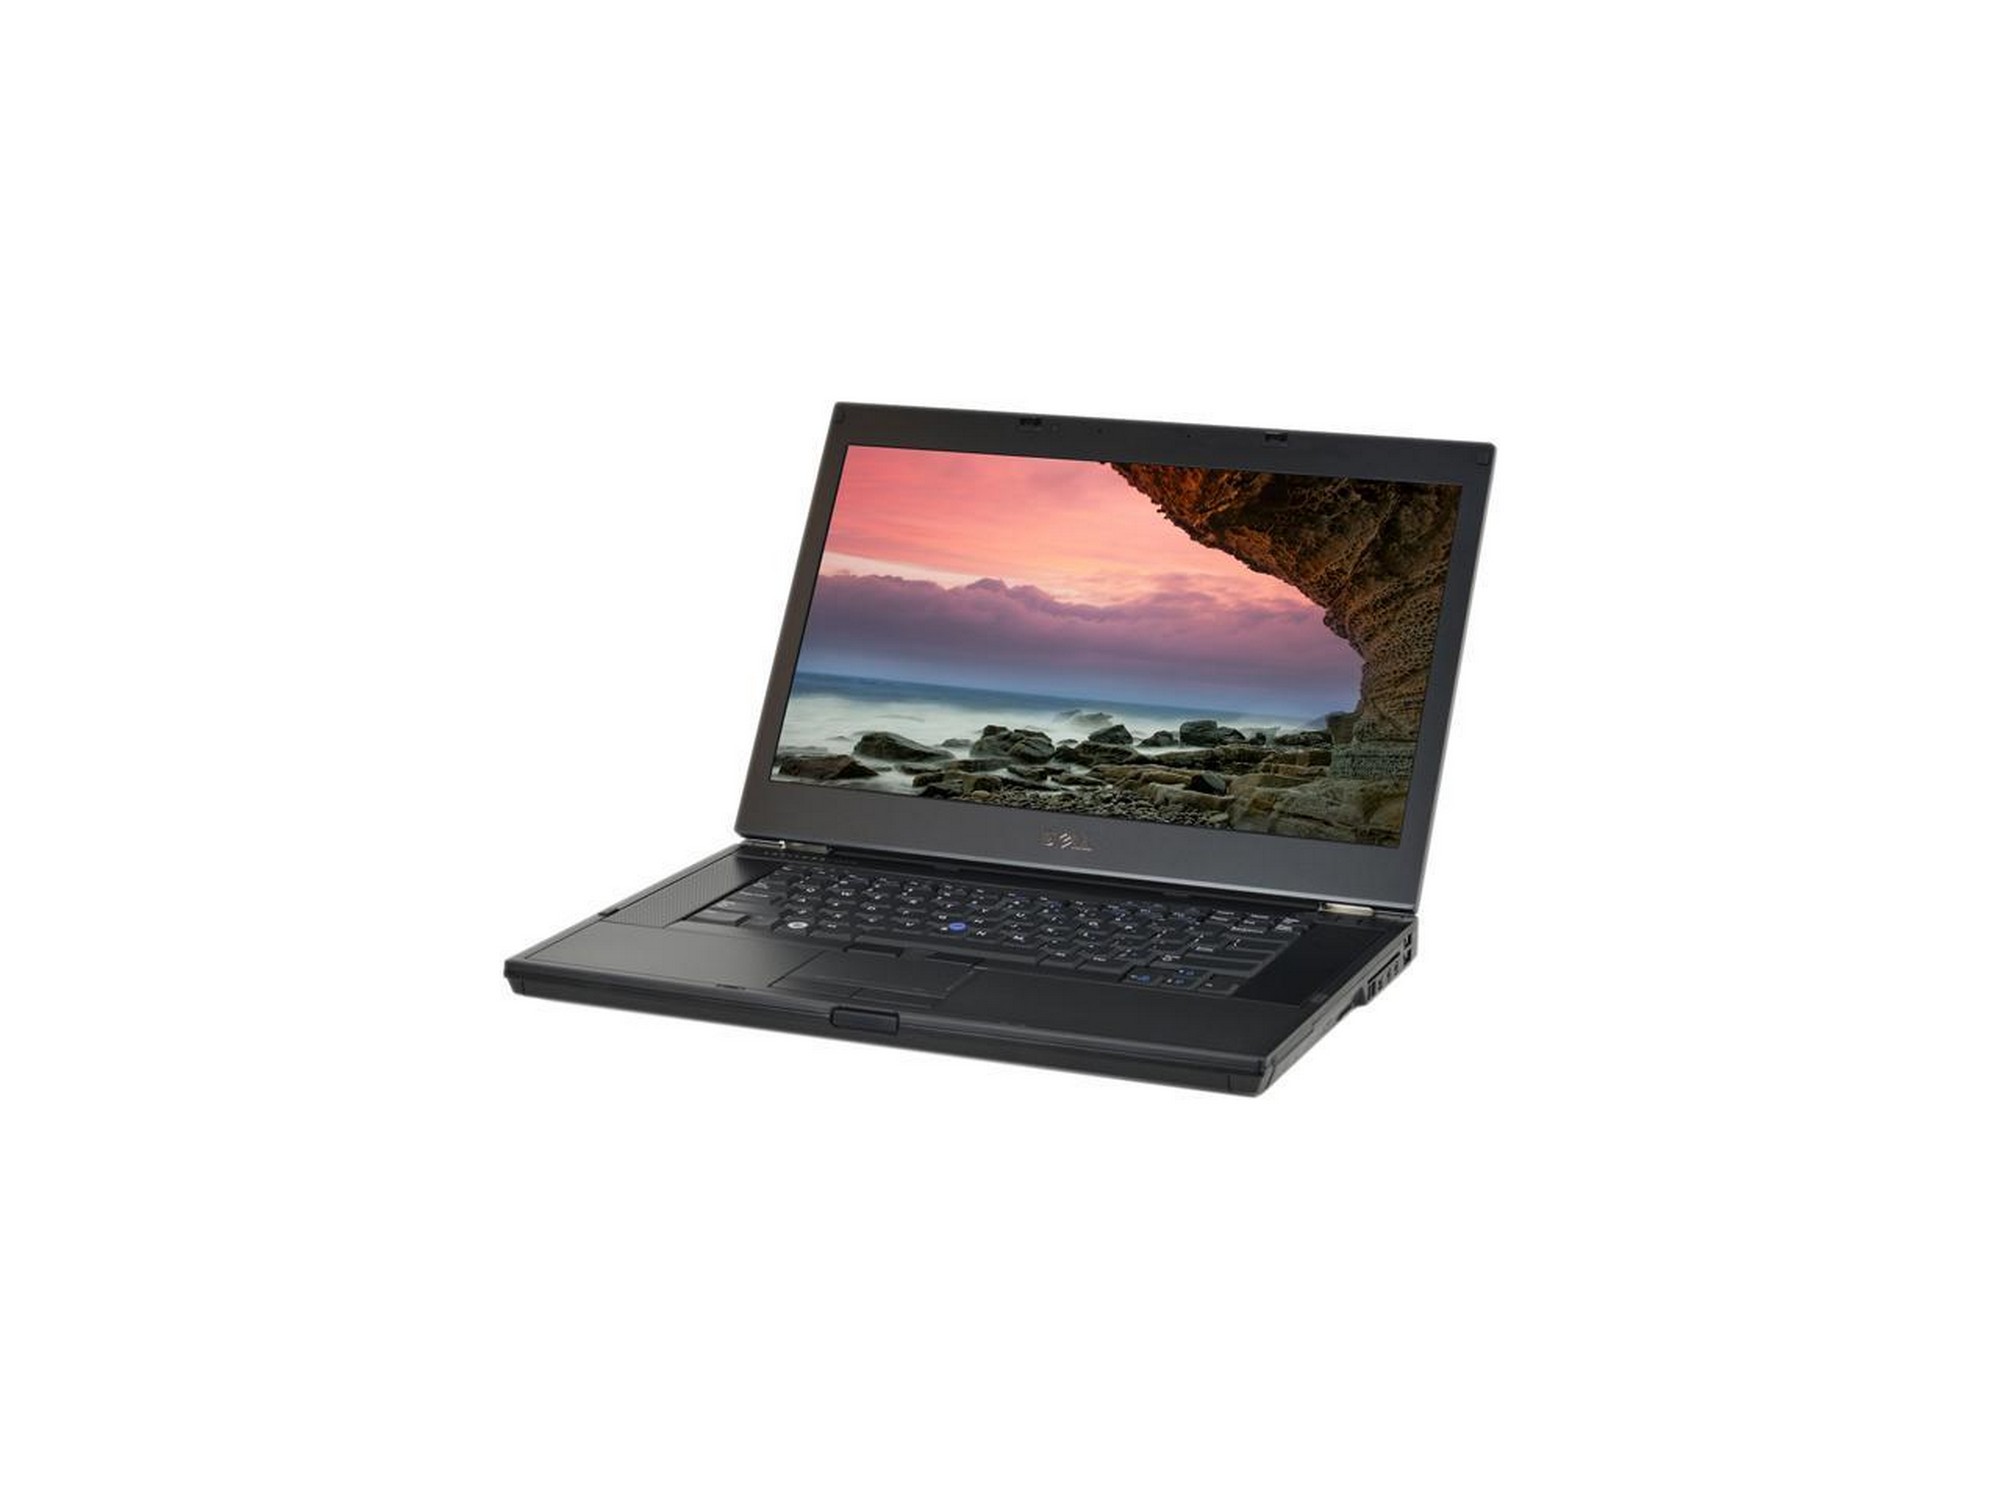 Dell Latitude E6510 15" Laptop, 2.6GHz Intel i5 Dual Core Gen 1, 4GB RAM, 160GB SATA HD, Windows 10 Home 64 Bit (Renewed)